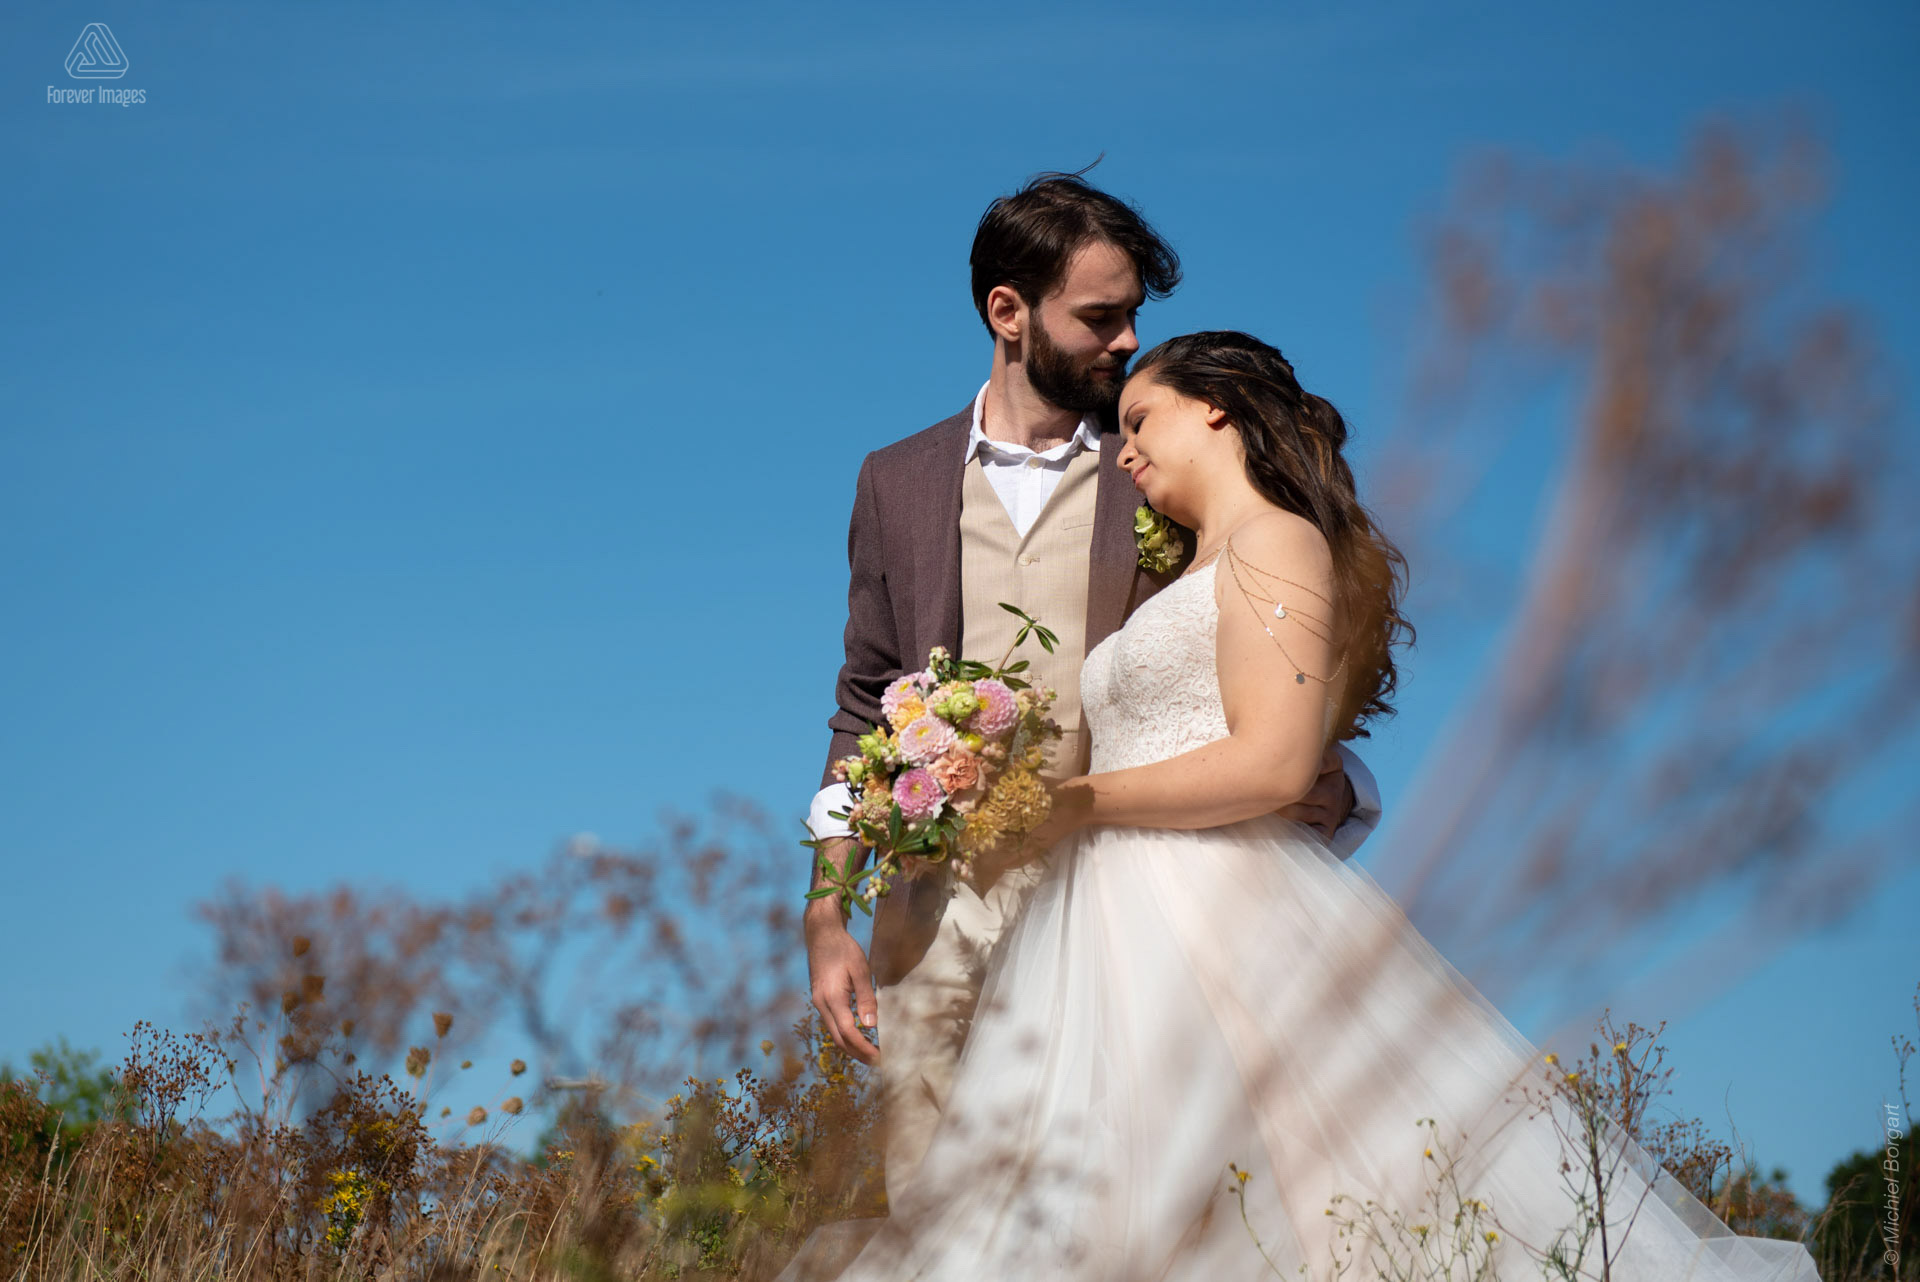 Bruidsfoto bruidspaar romantisch samen buiten | Bruidsfotograaf Michiel Borgart - Forever Images.